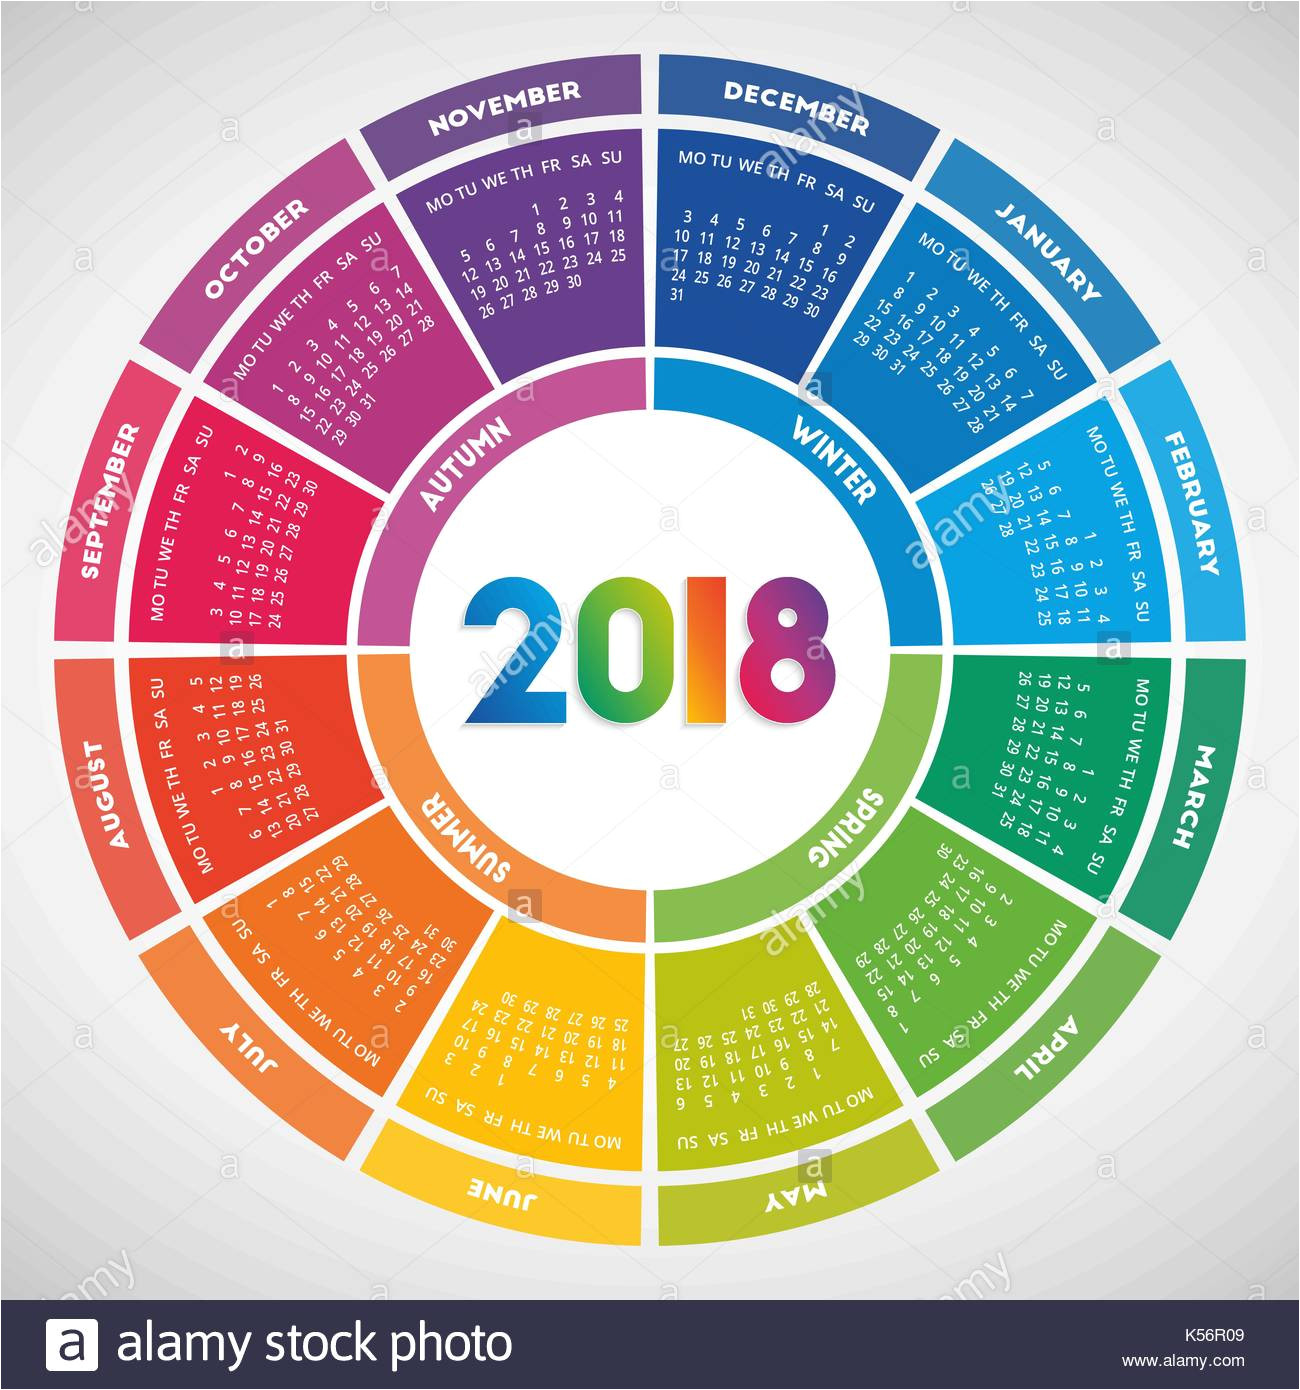 stock photo colorful round calendar 2018 design week starts on monday 158116345